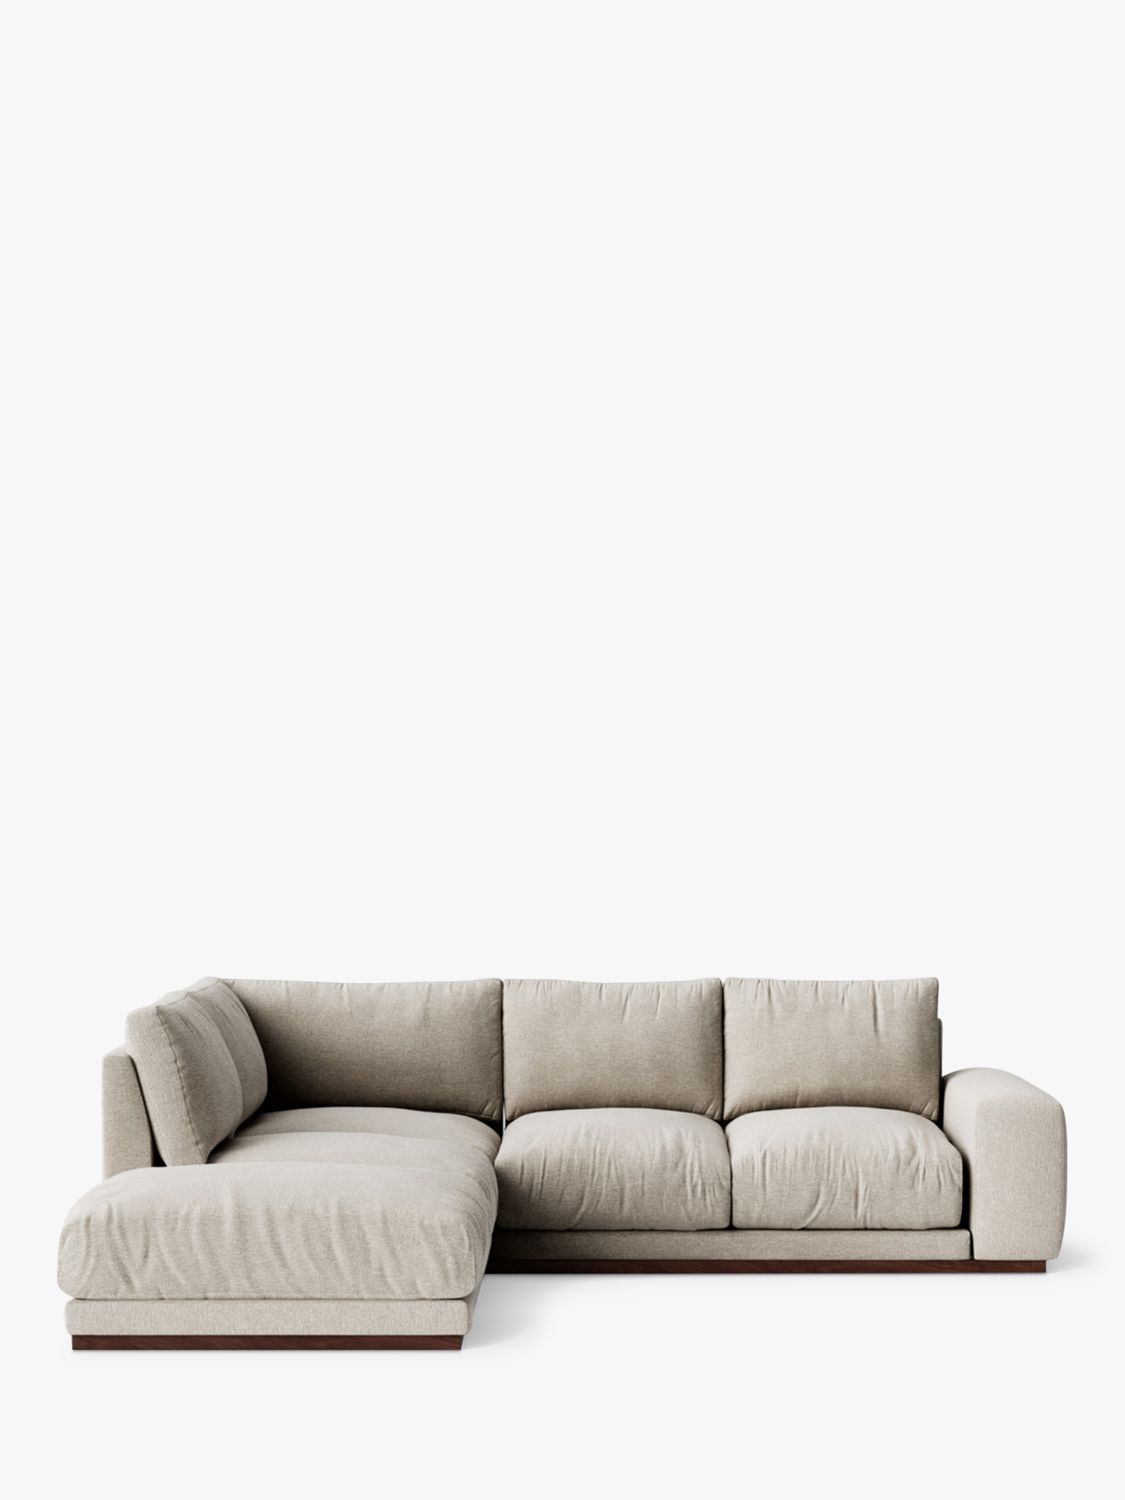 Photo of Swoon denver grand 4 seater lhf corner end sofa